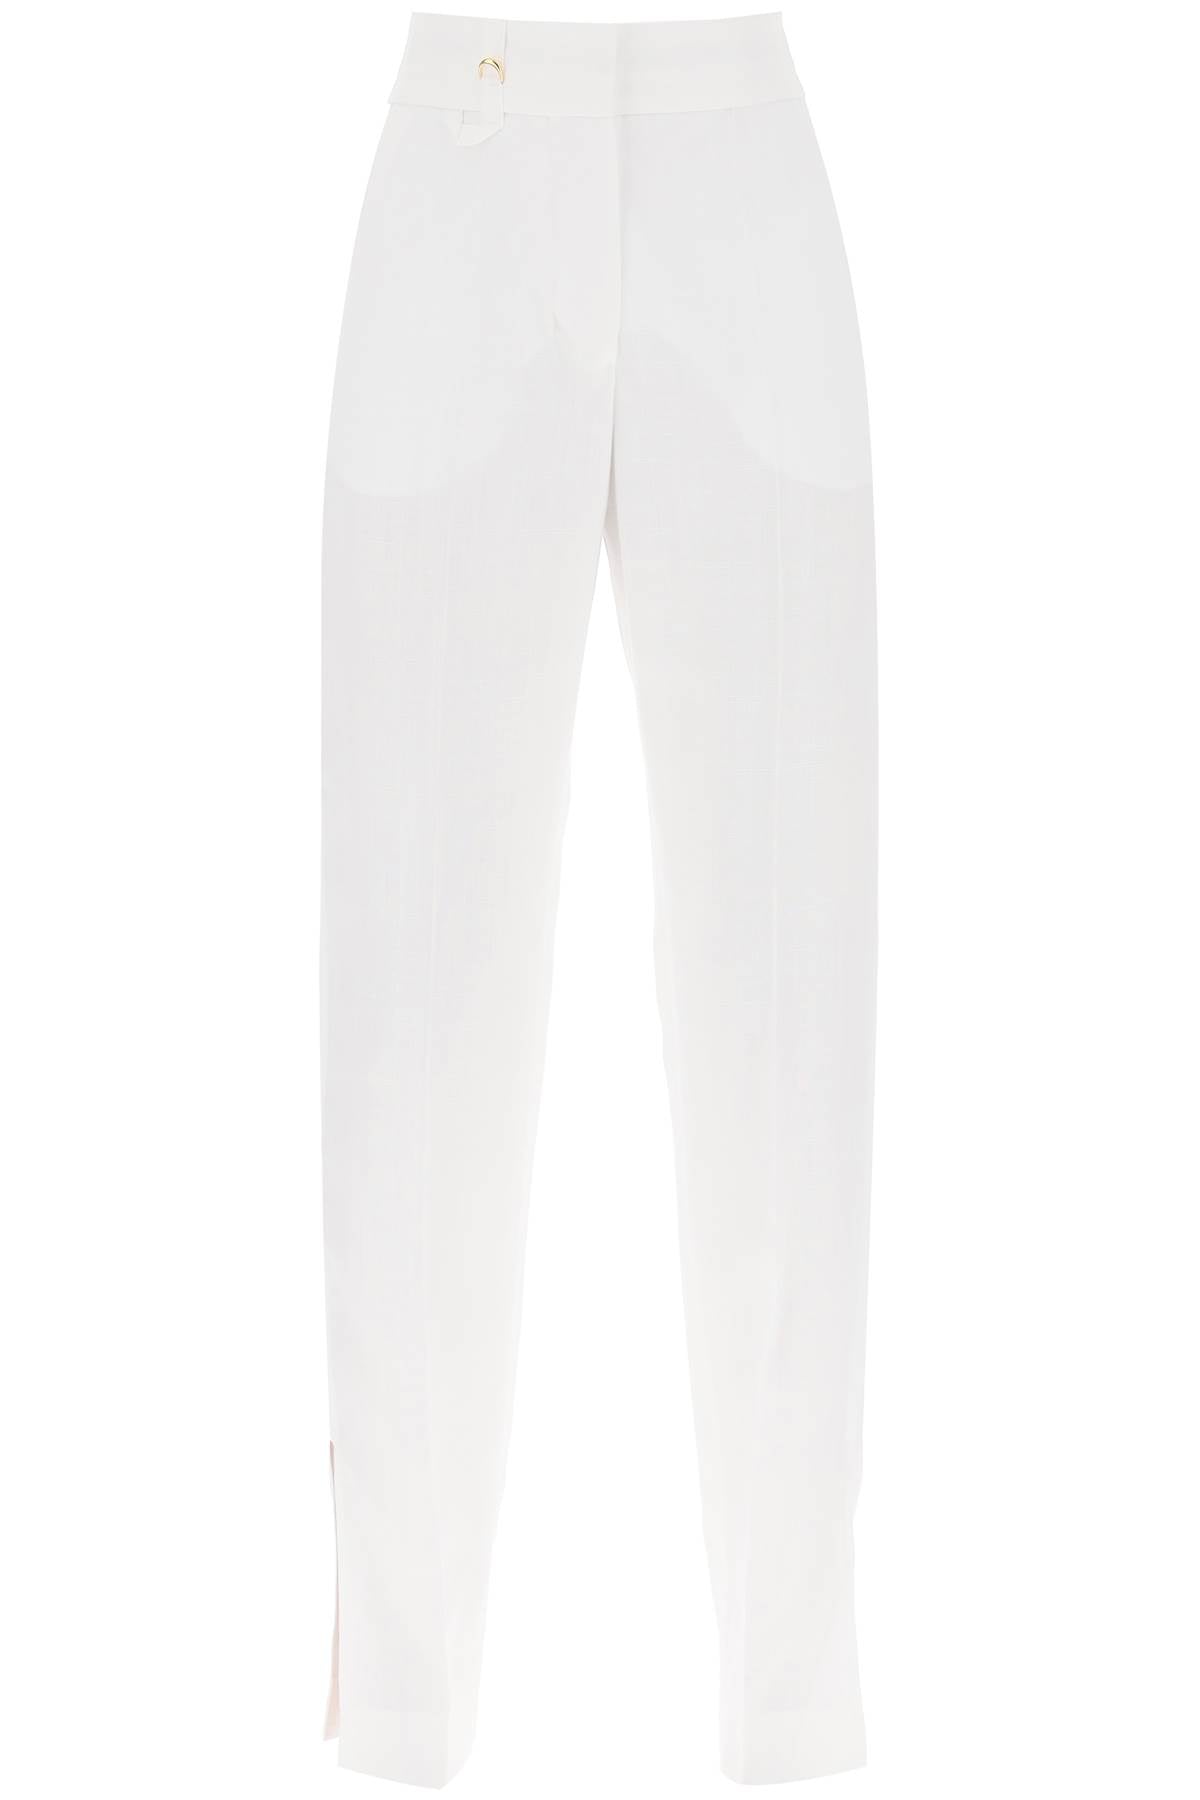 'Le Pantalon Tibau' Slit Pants - White